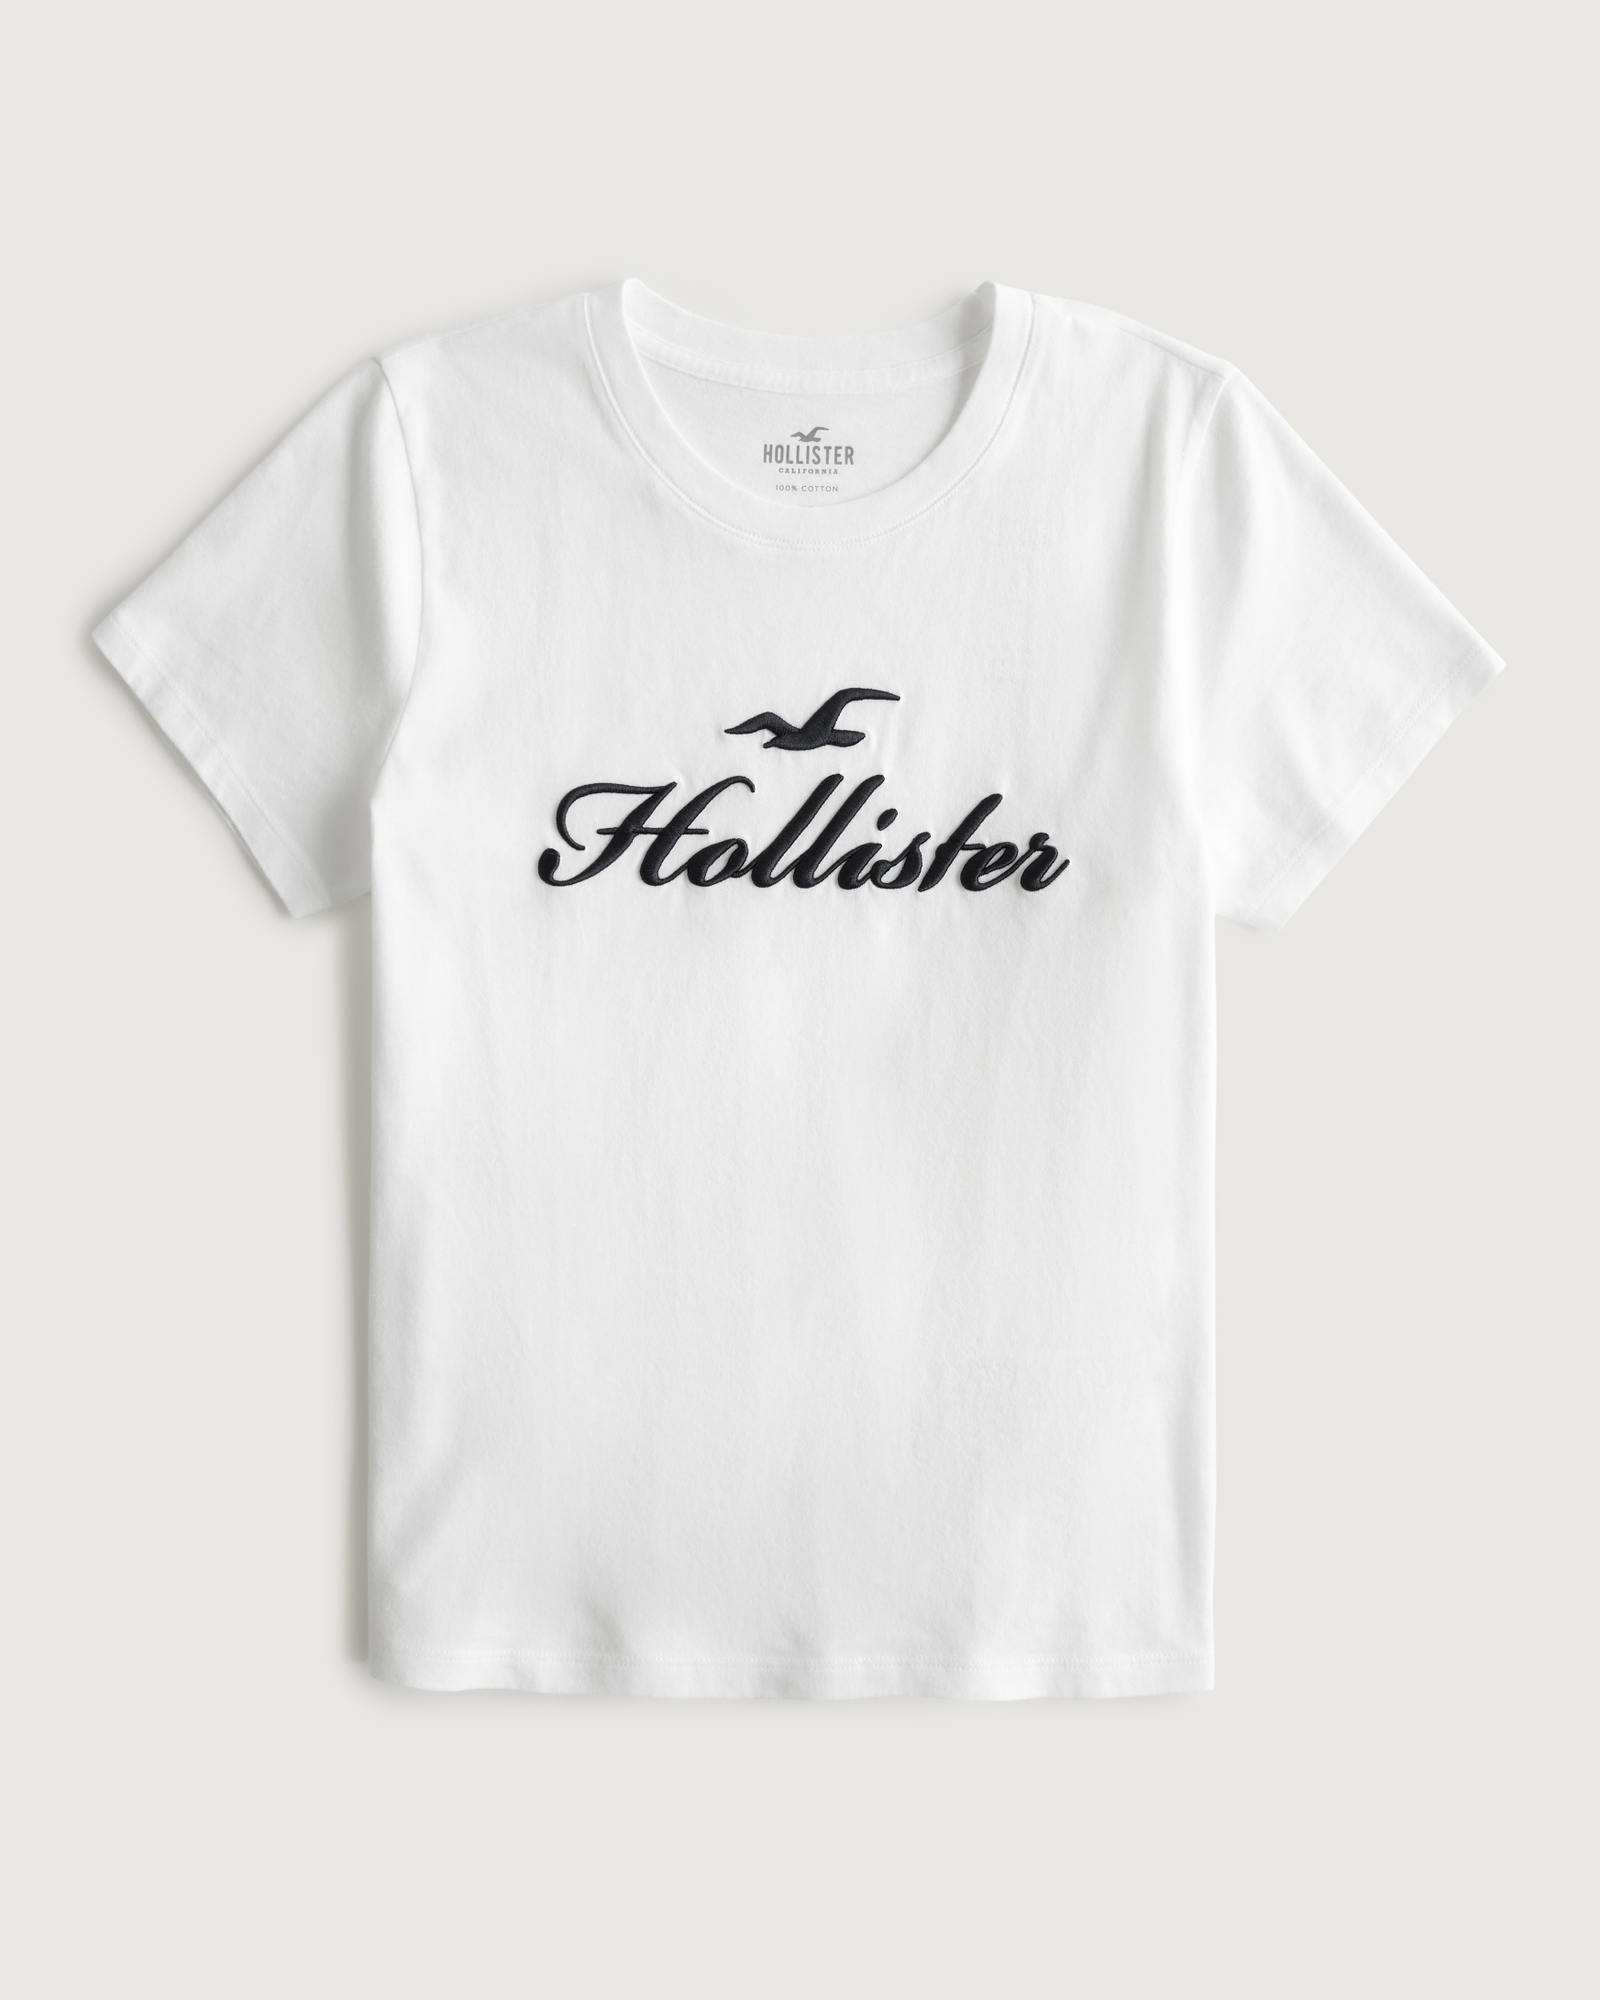 Hollister Womens T-Shirt White Black California Short Sleeve Scoop Neck S